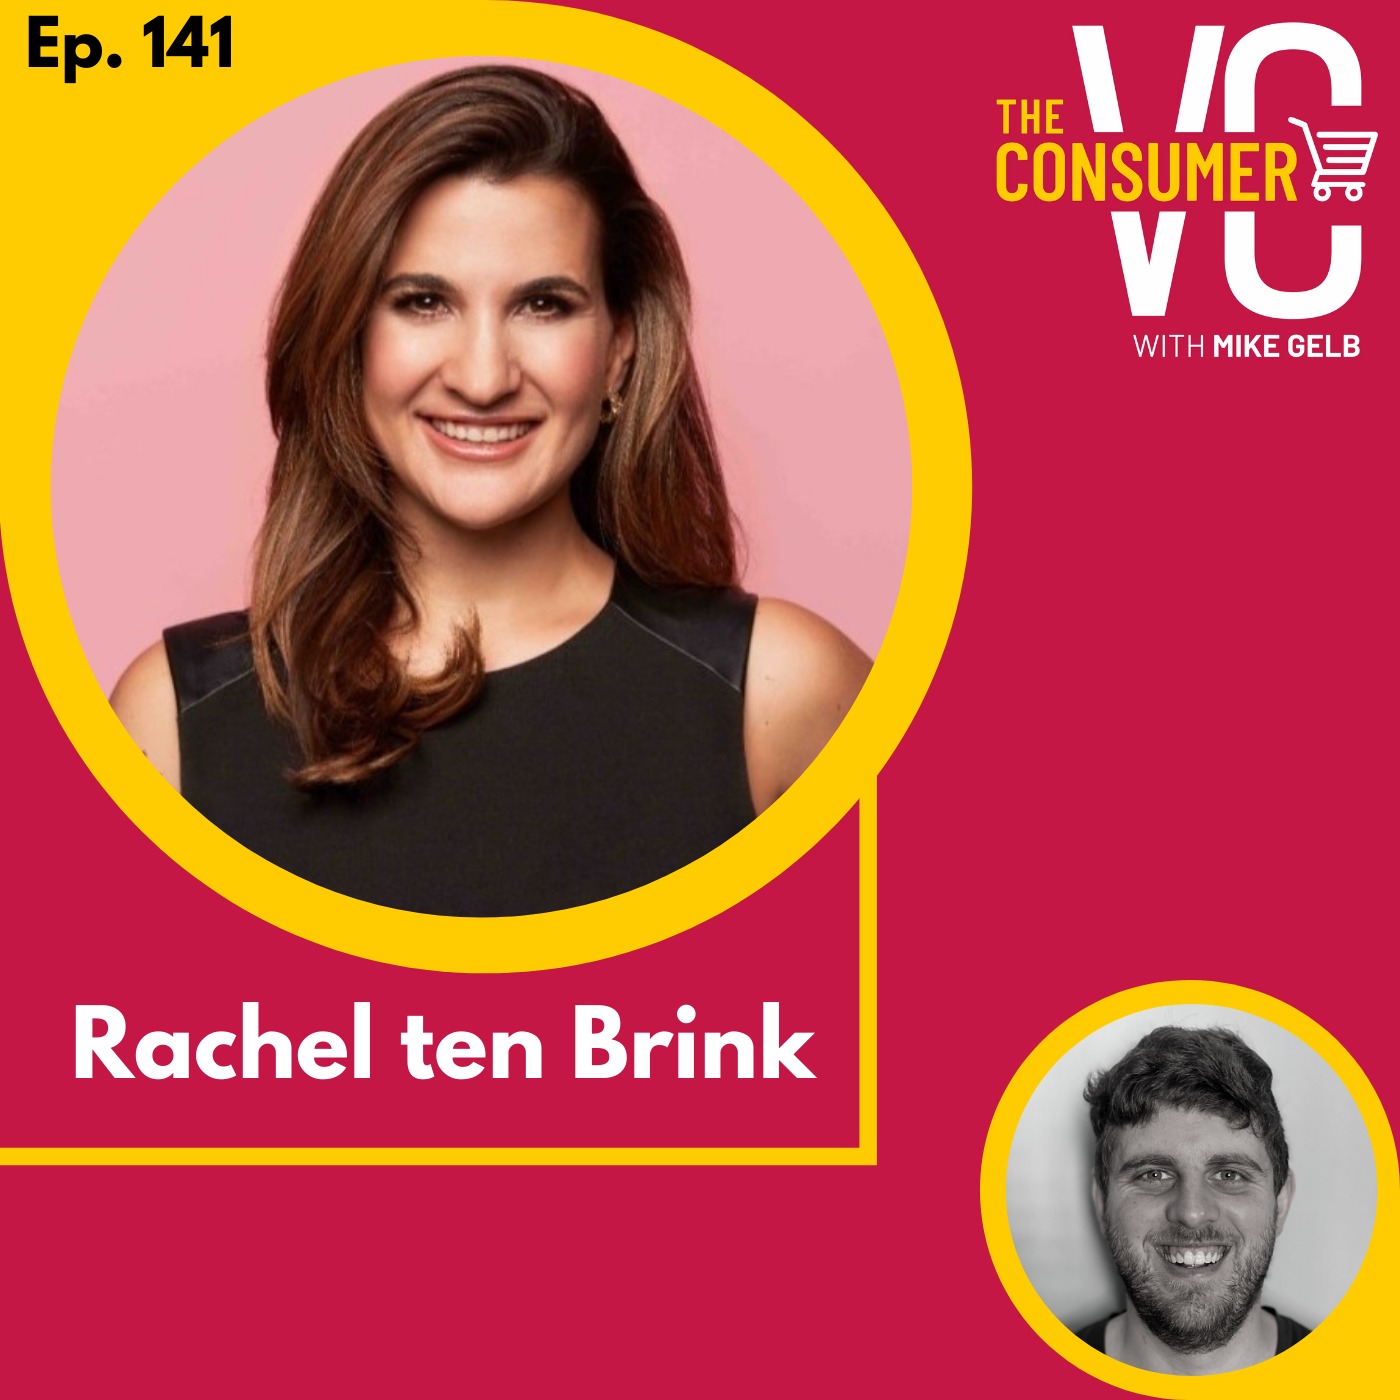 Rachel ten Brink - Founding Scentbird, investing in personal care, and how to grow online